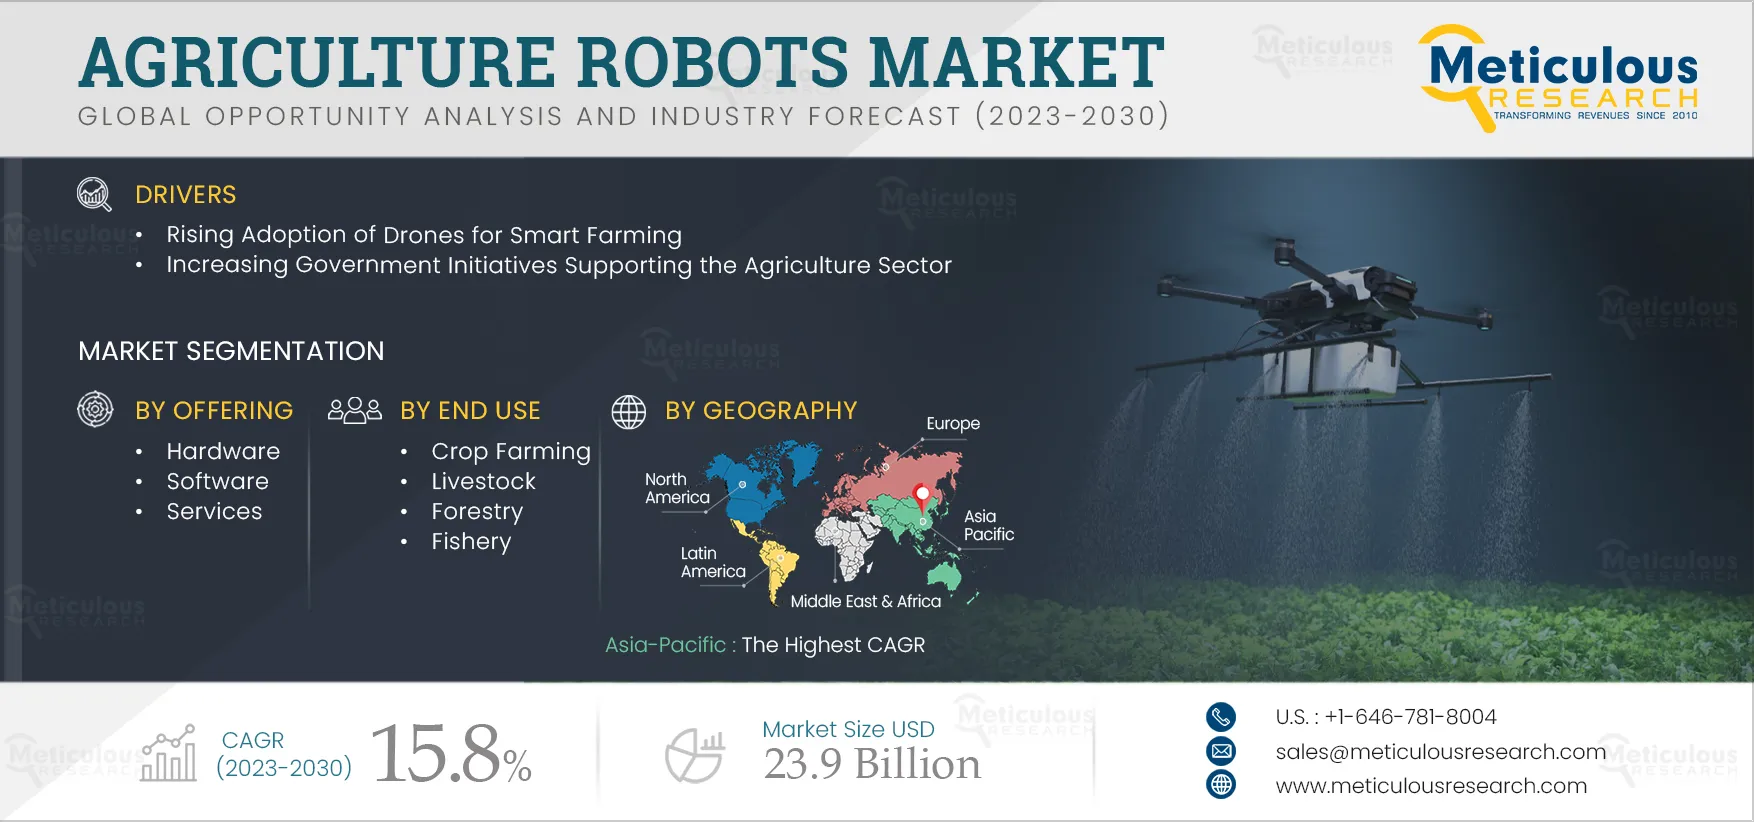 Agriculture Robots Market